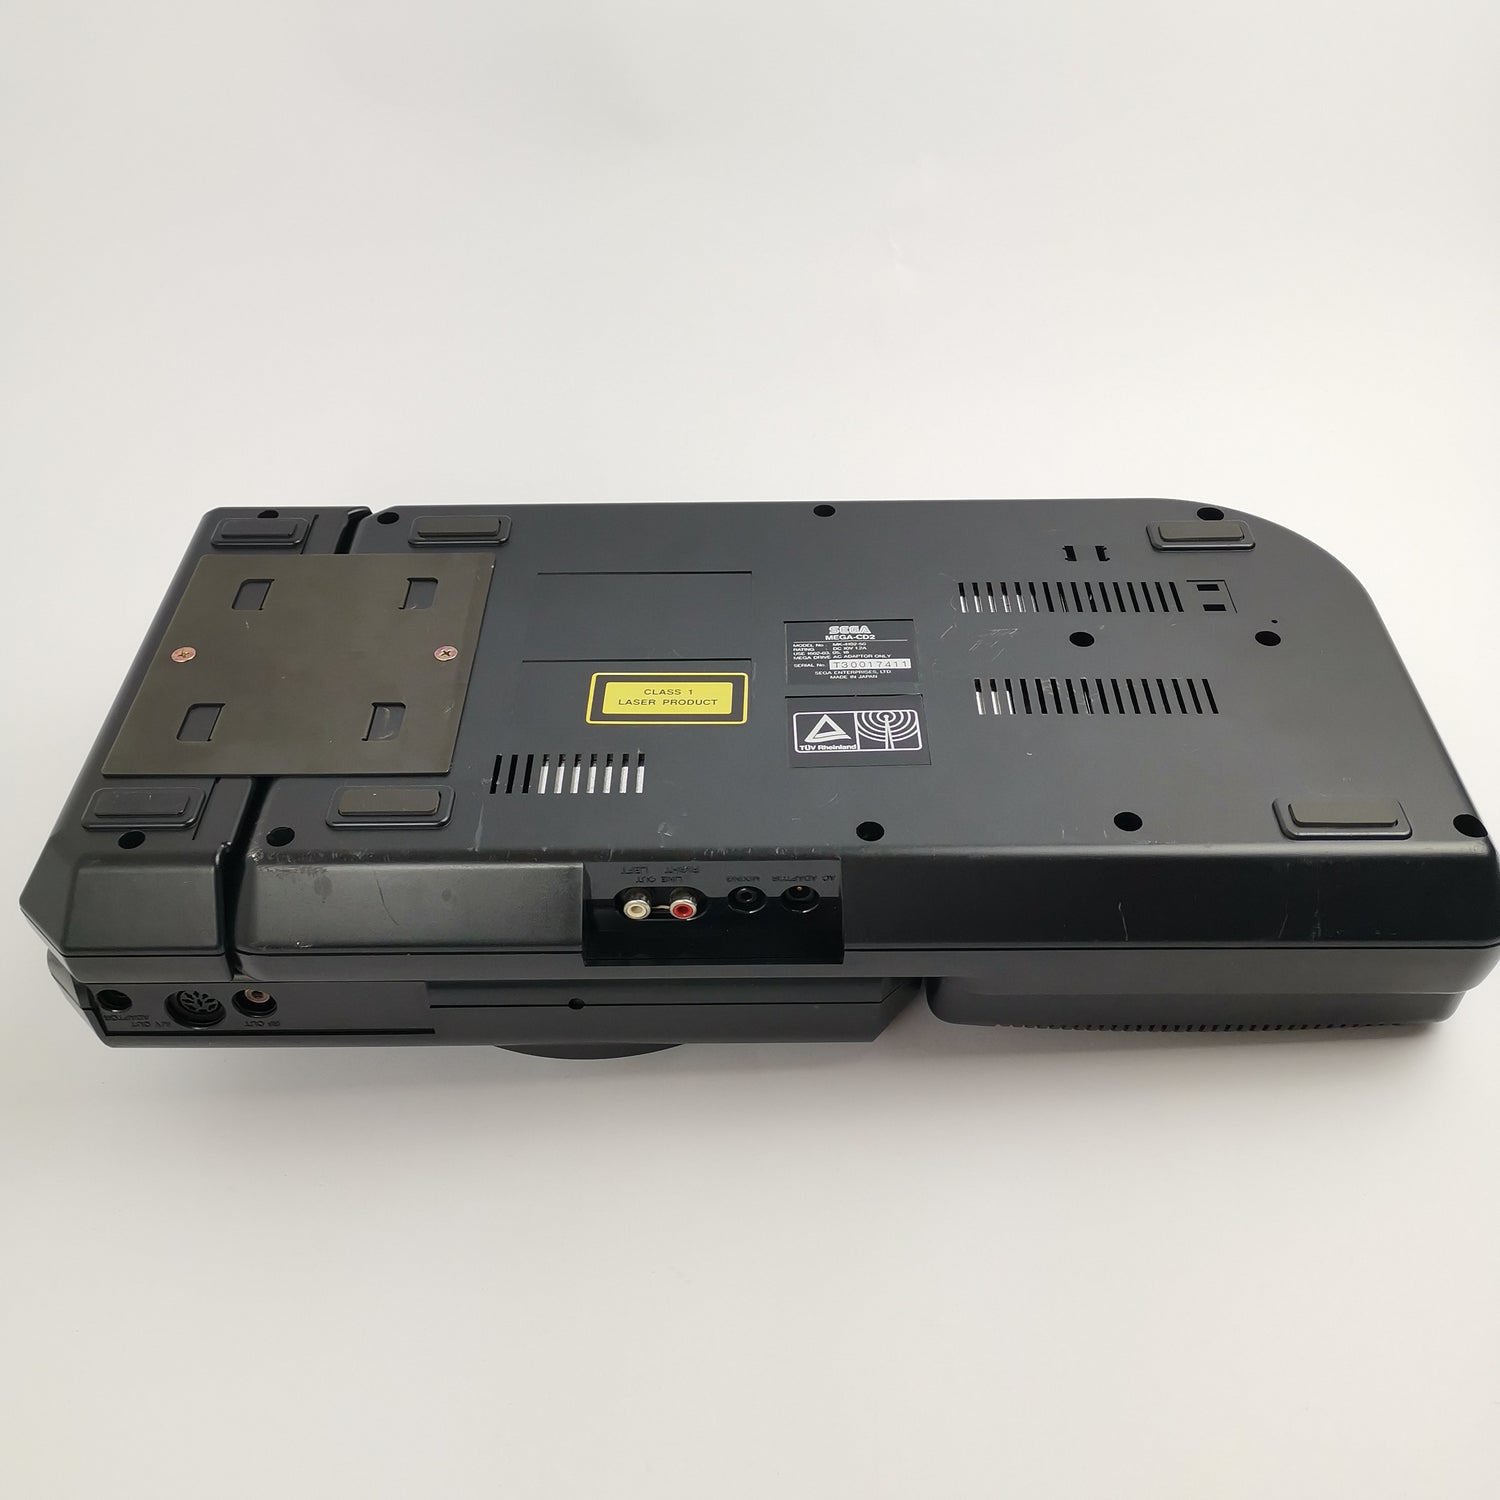 Sega Mega CD console: with Mega Drive 1, 3 games and accessories | MD/MC - PAL